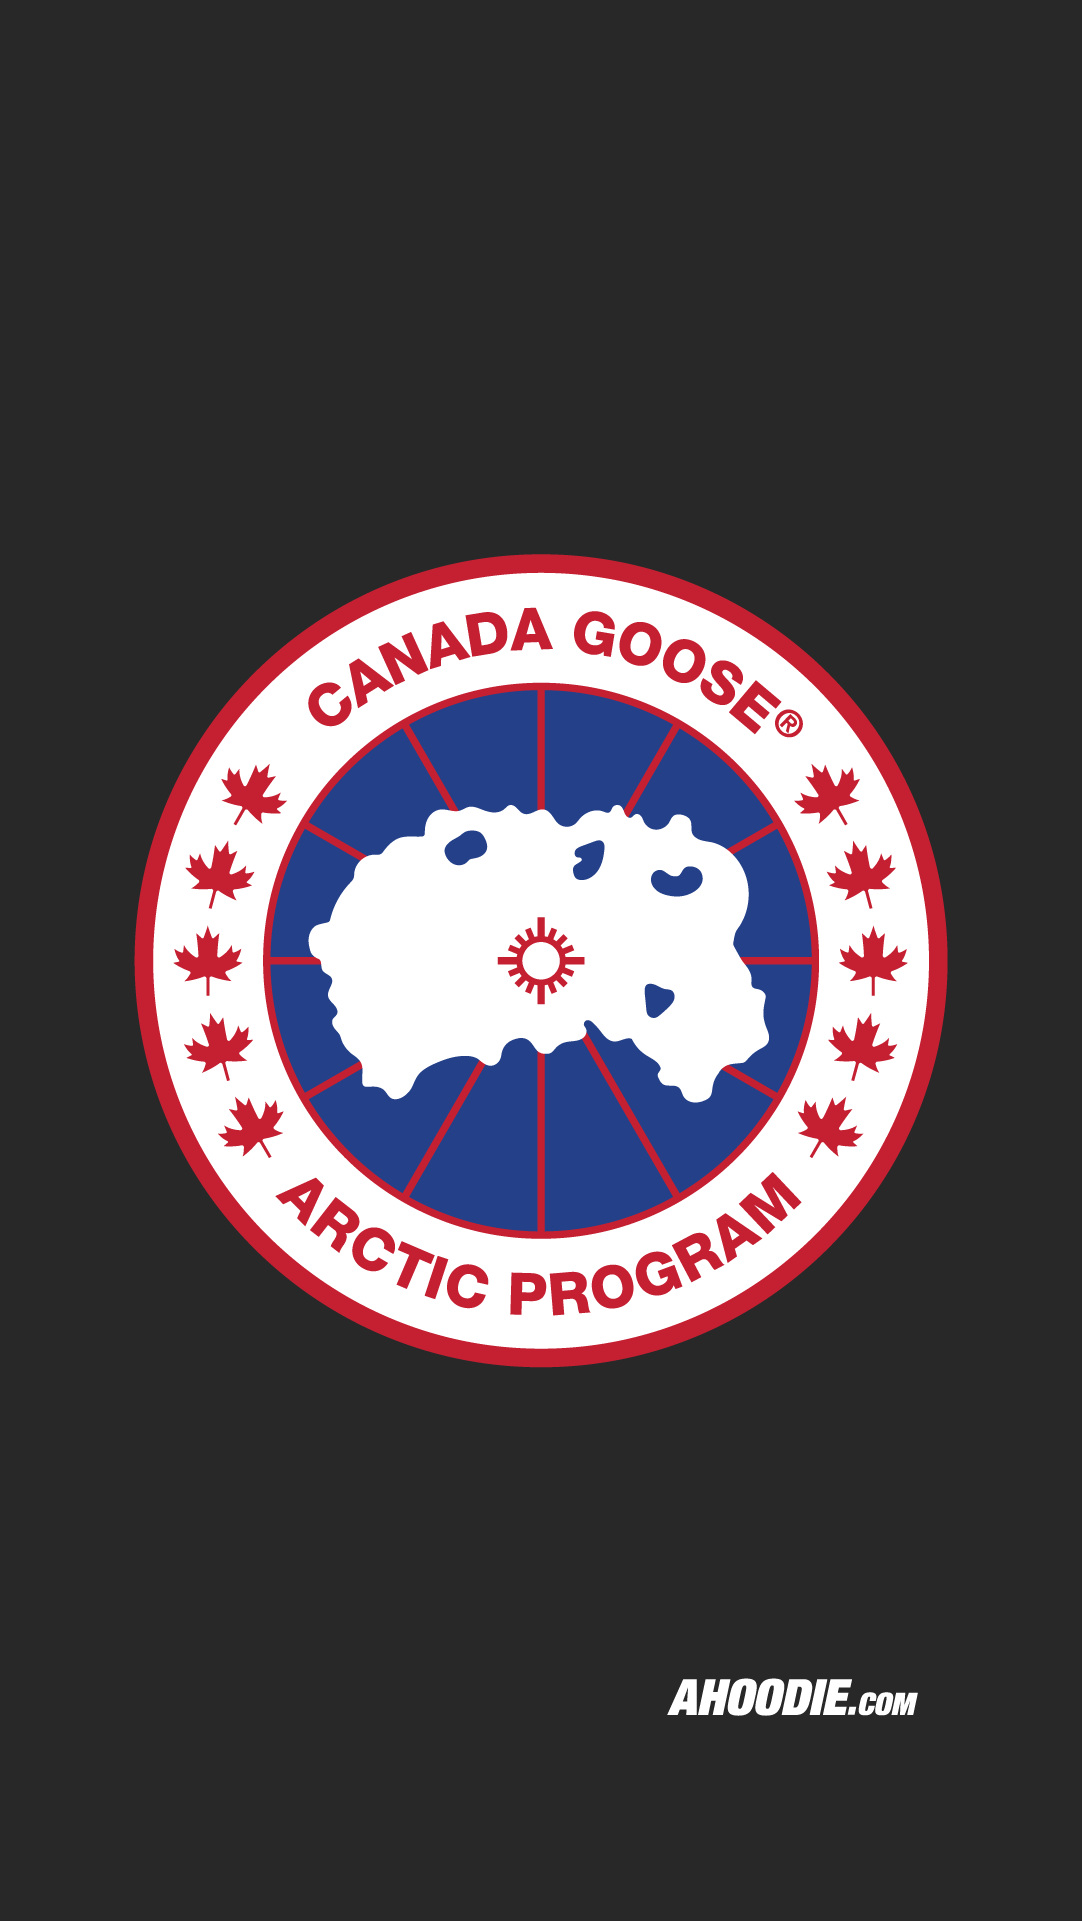 Canada Goose logo wallpaper in charcoal